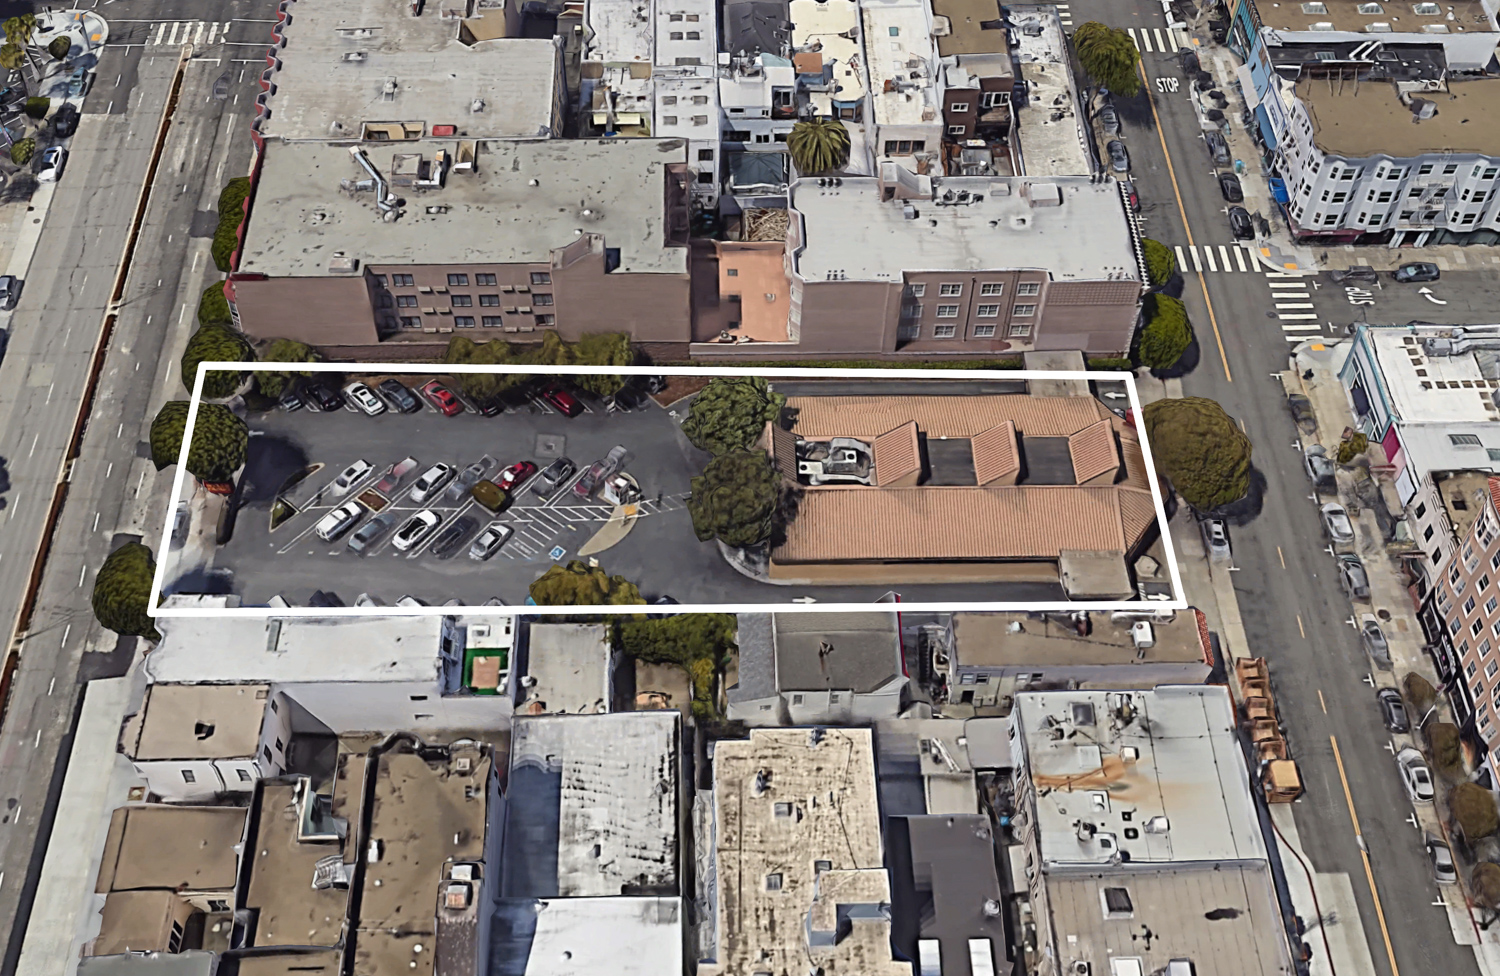 2055 Chestnut Street, aerial view by Google Satellite